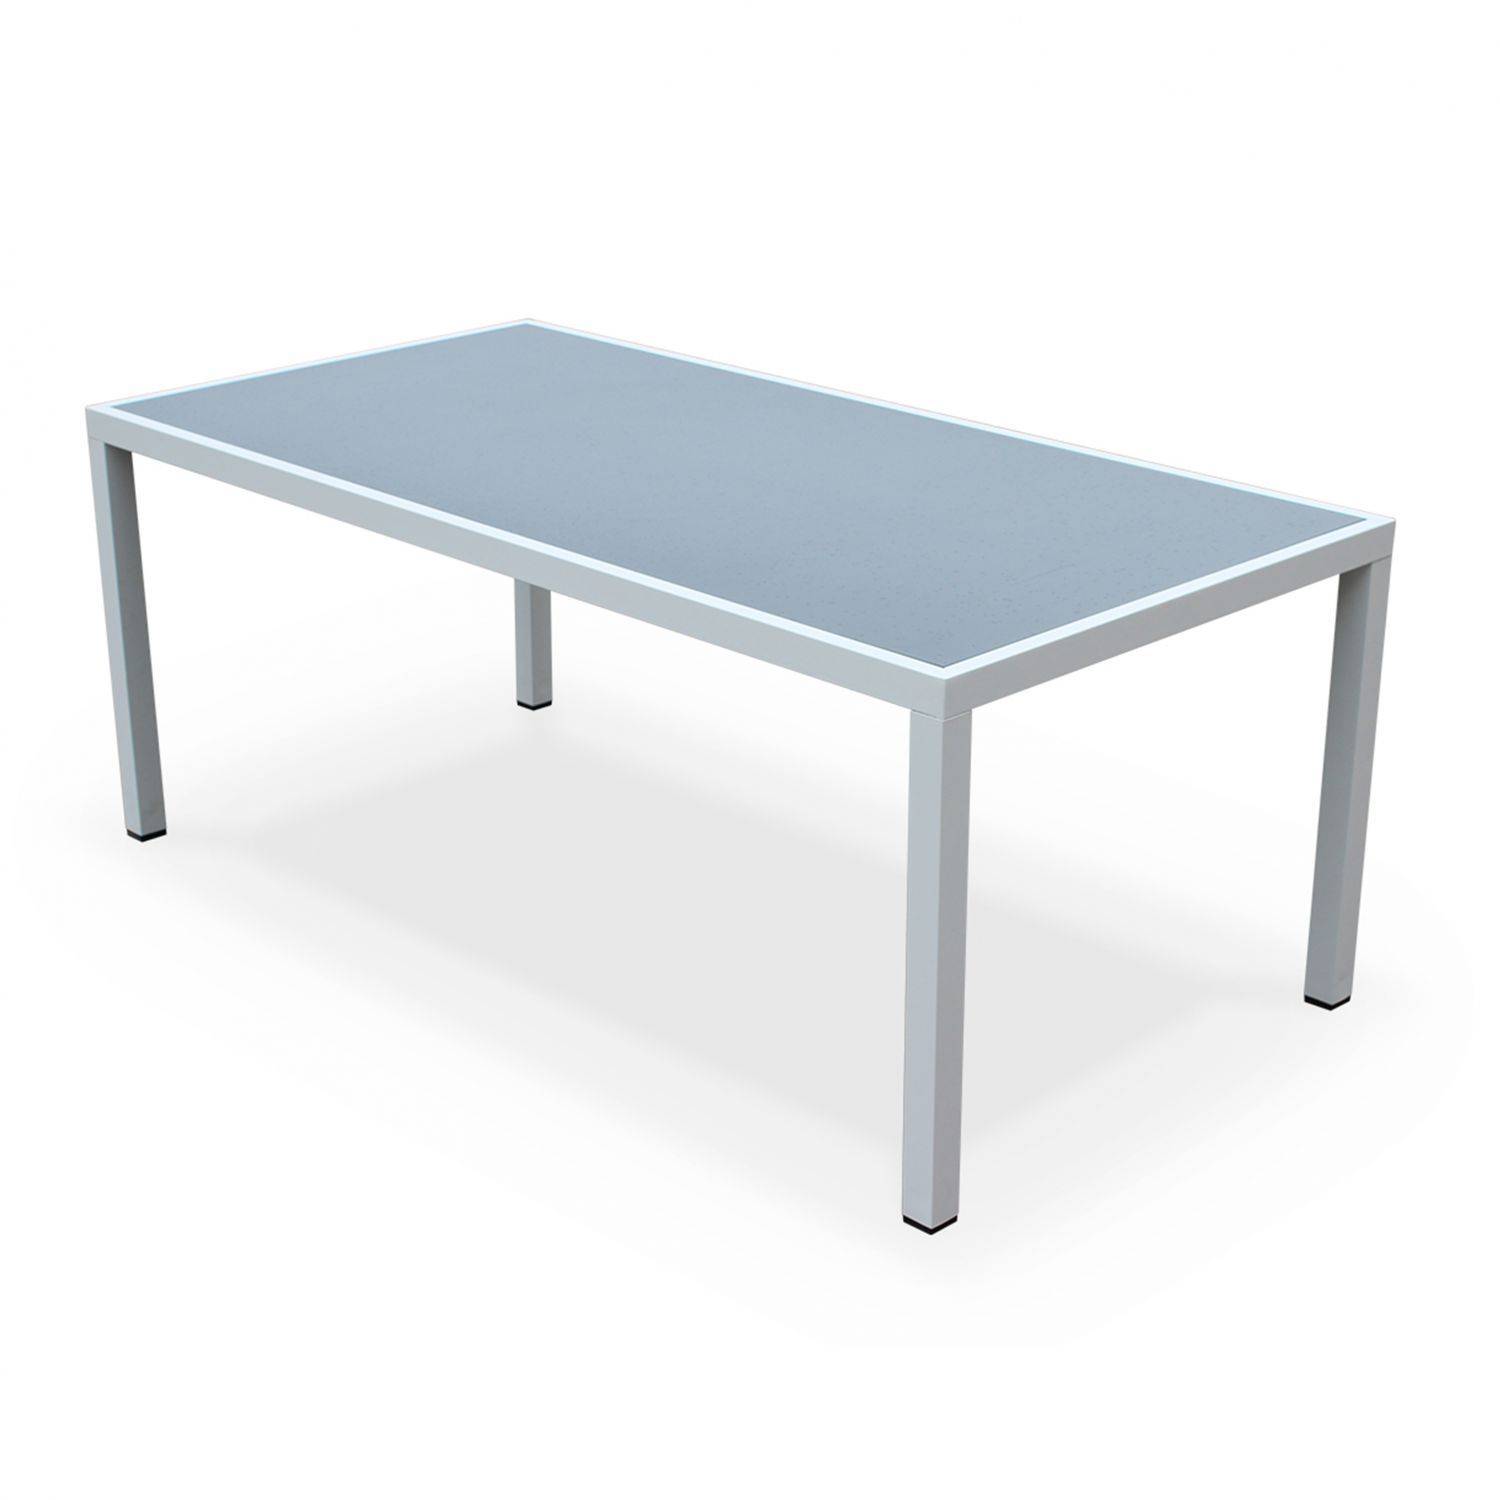 Gartengarnitur aus Aluminium und Textilene - Capua 180 cm - Weiß, Grau - 8 Plätze - 1 großer rechteckiger Tisch, 8 stapelbare Sessel Photo3